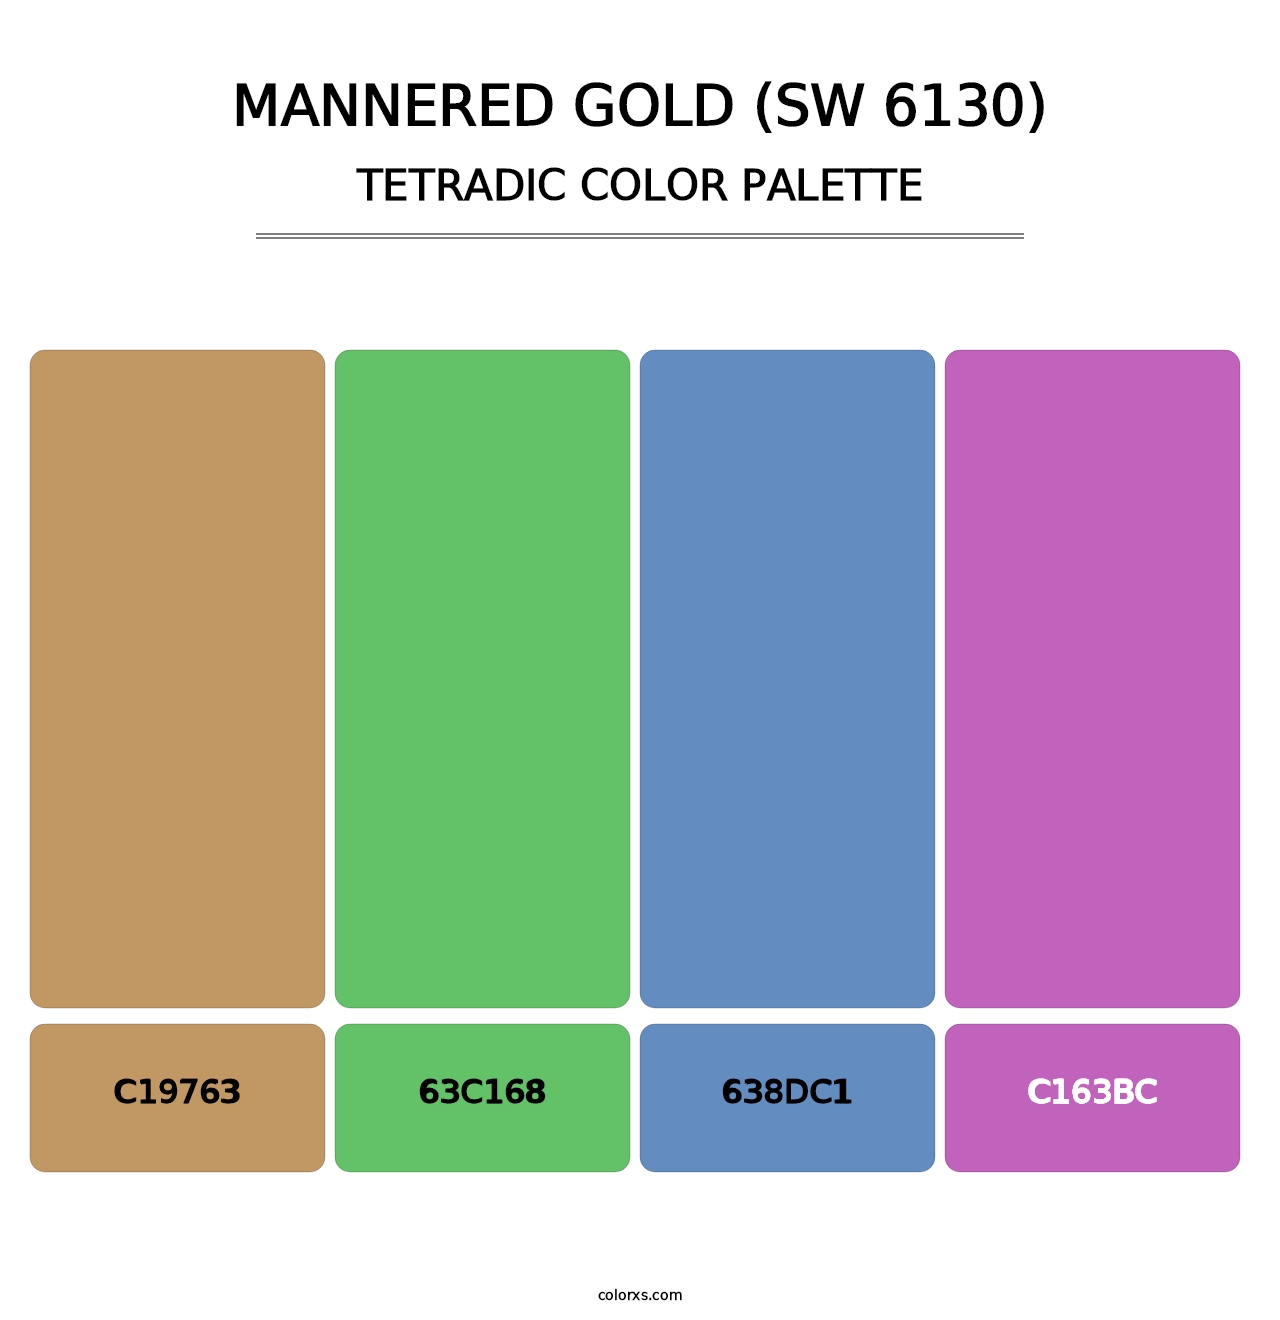 Mannered Gold (SW 6130) - Tetradic Color Palette